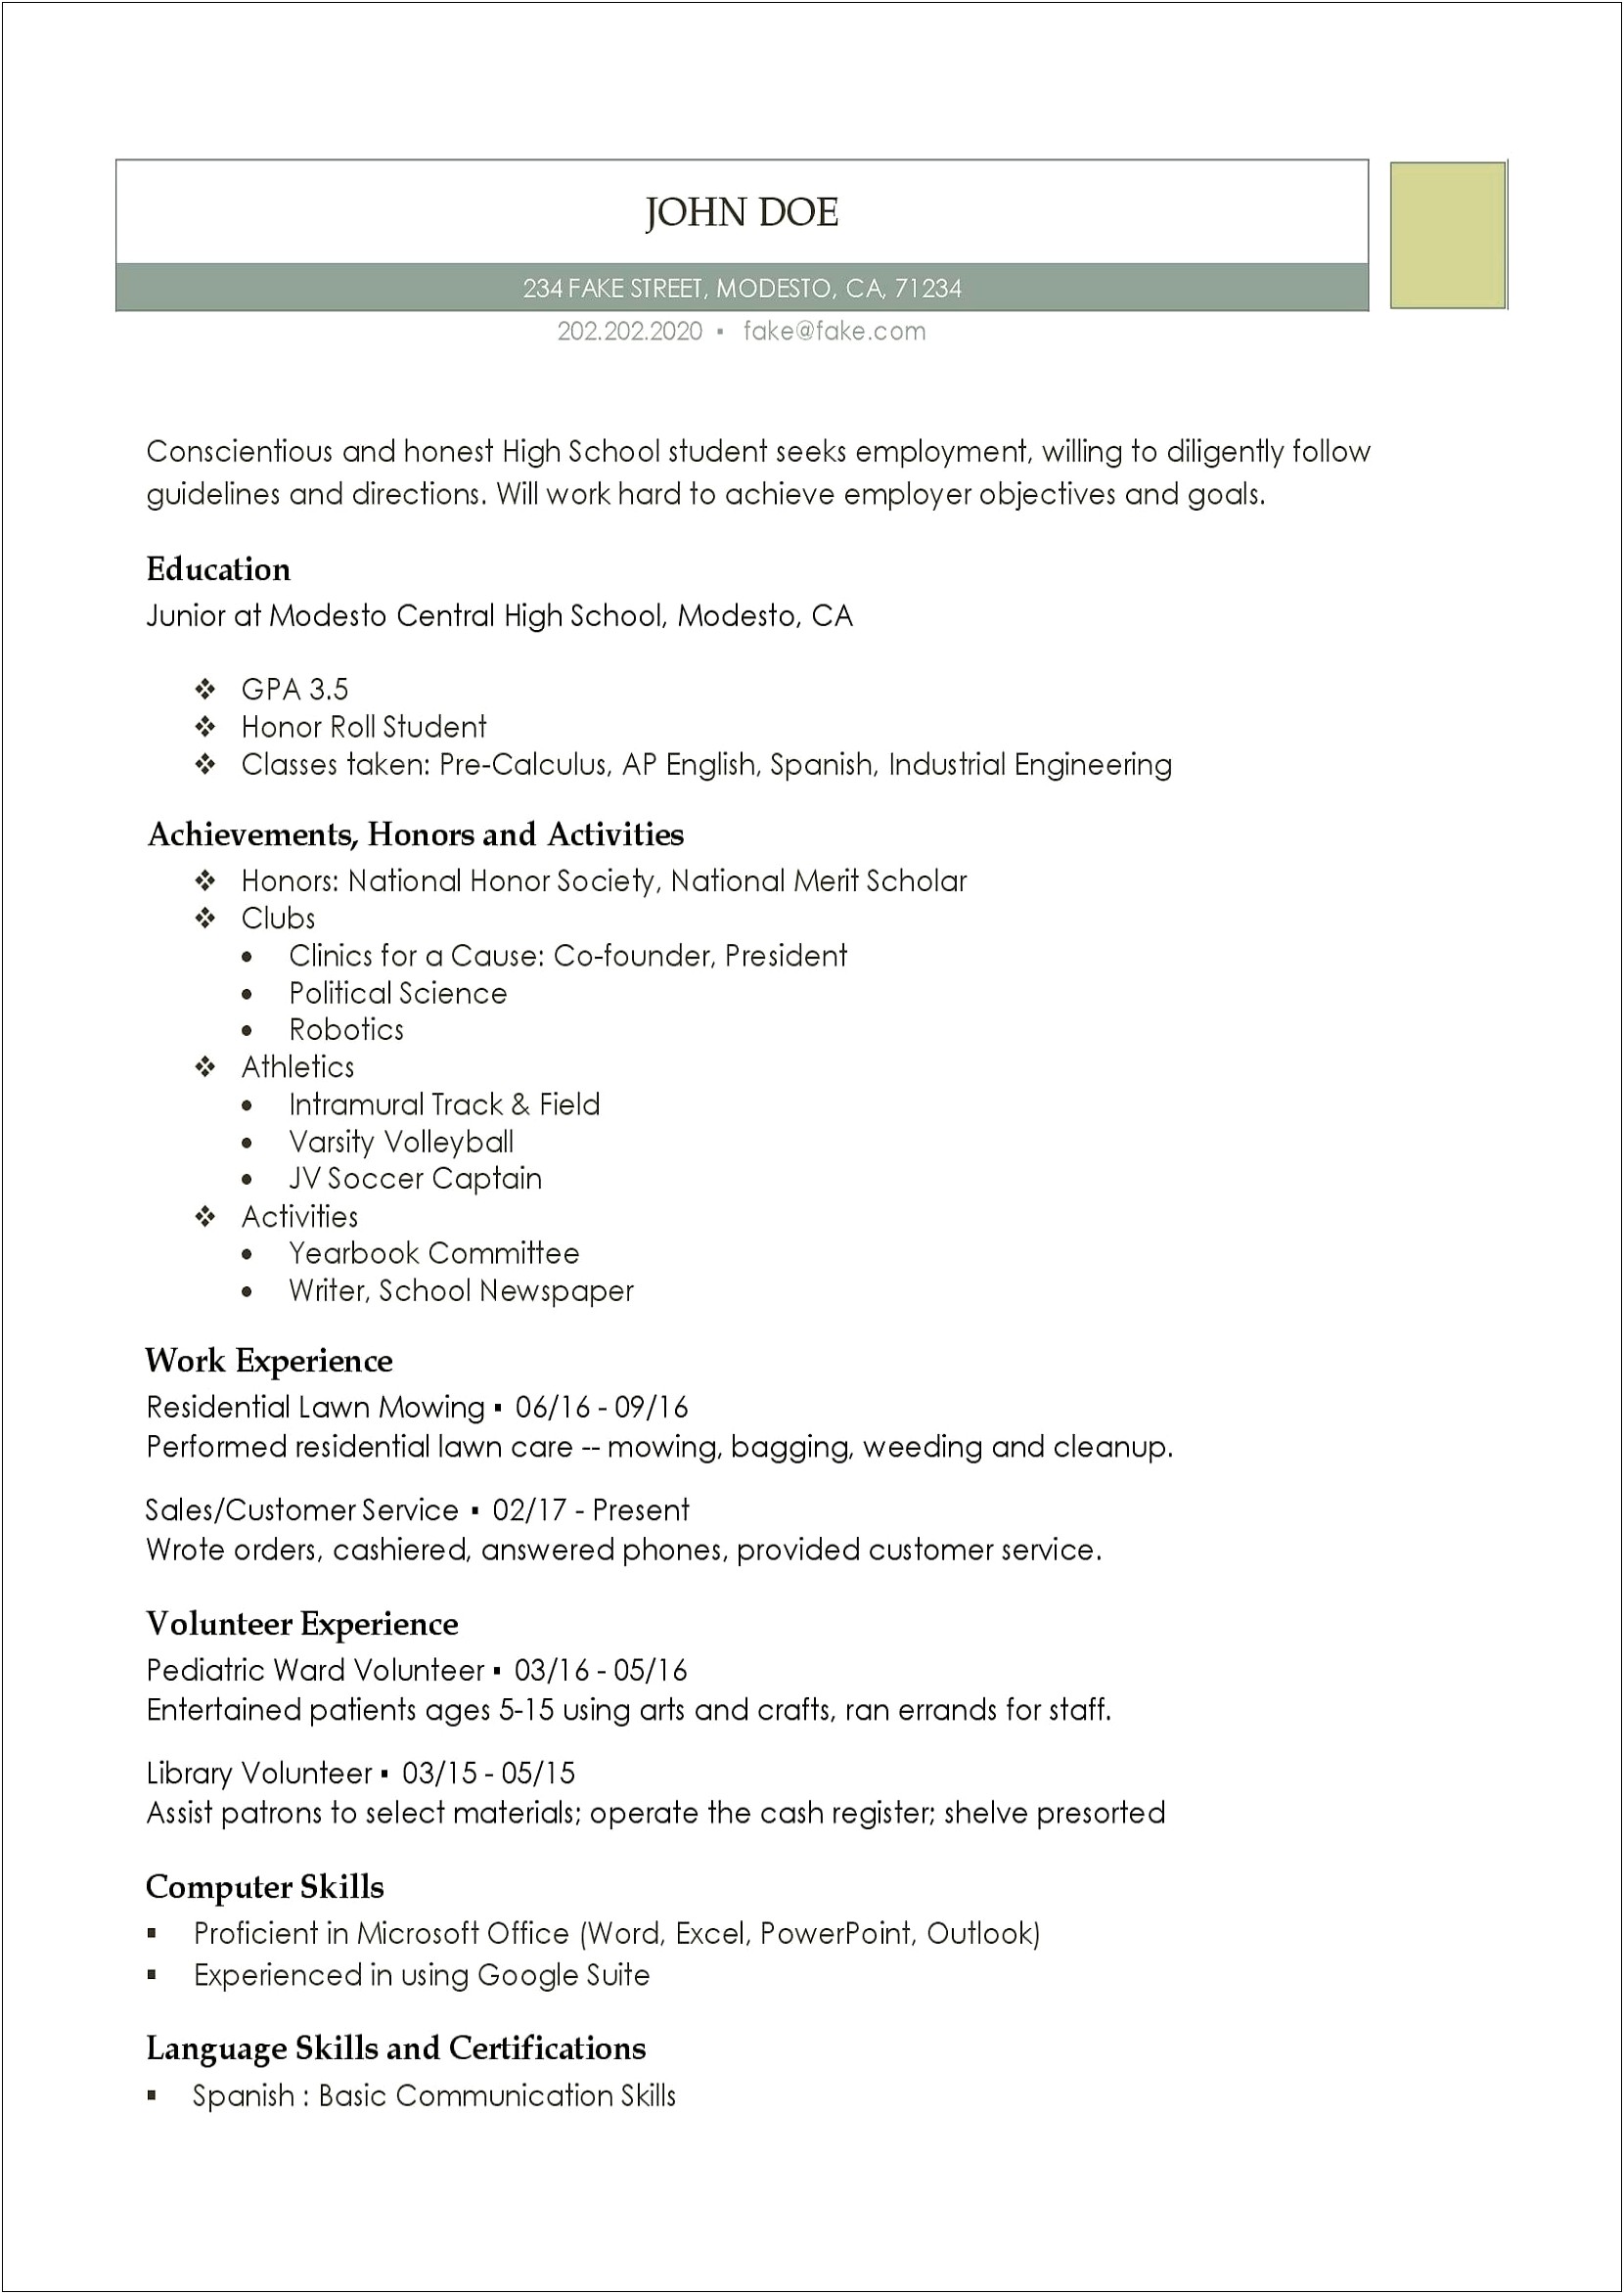 Resume High School Description Example